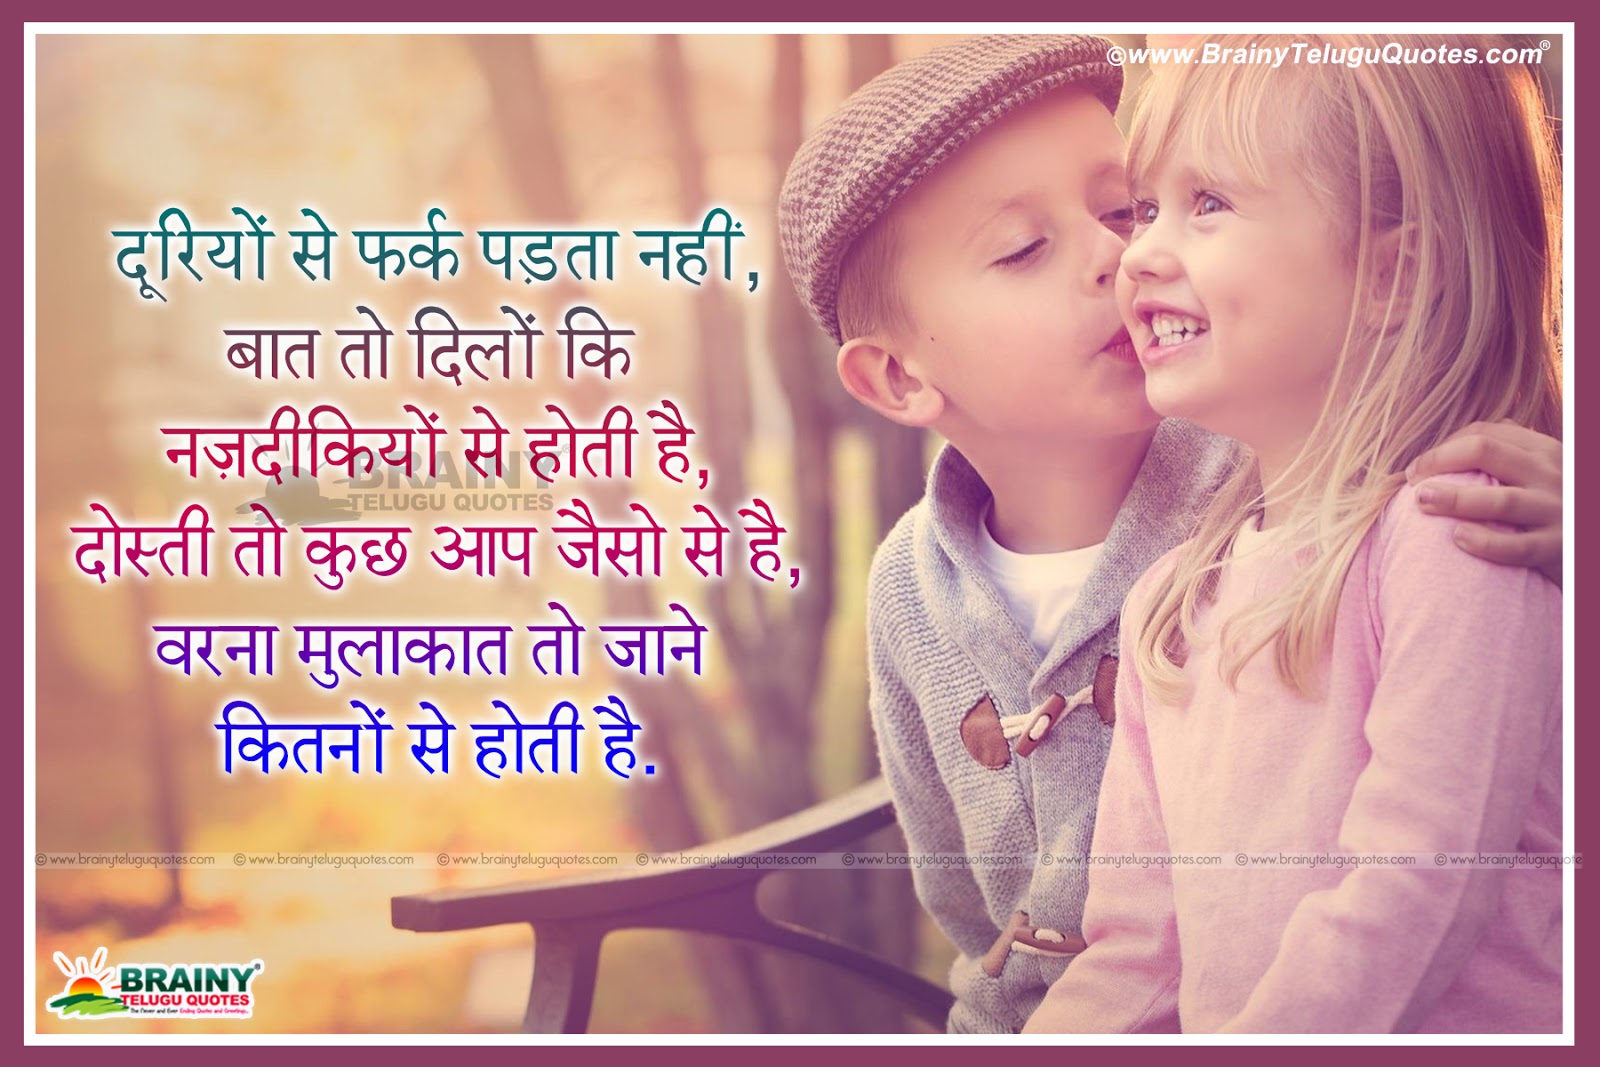 Best friendship quotes in Hindi | BrainyTeluguQuotes.comTelugu quotes